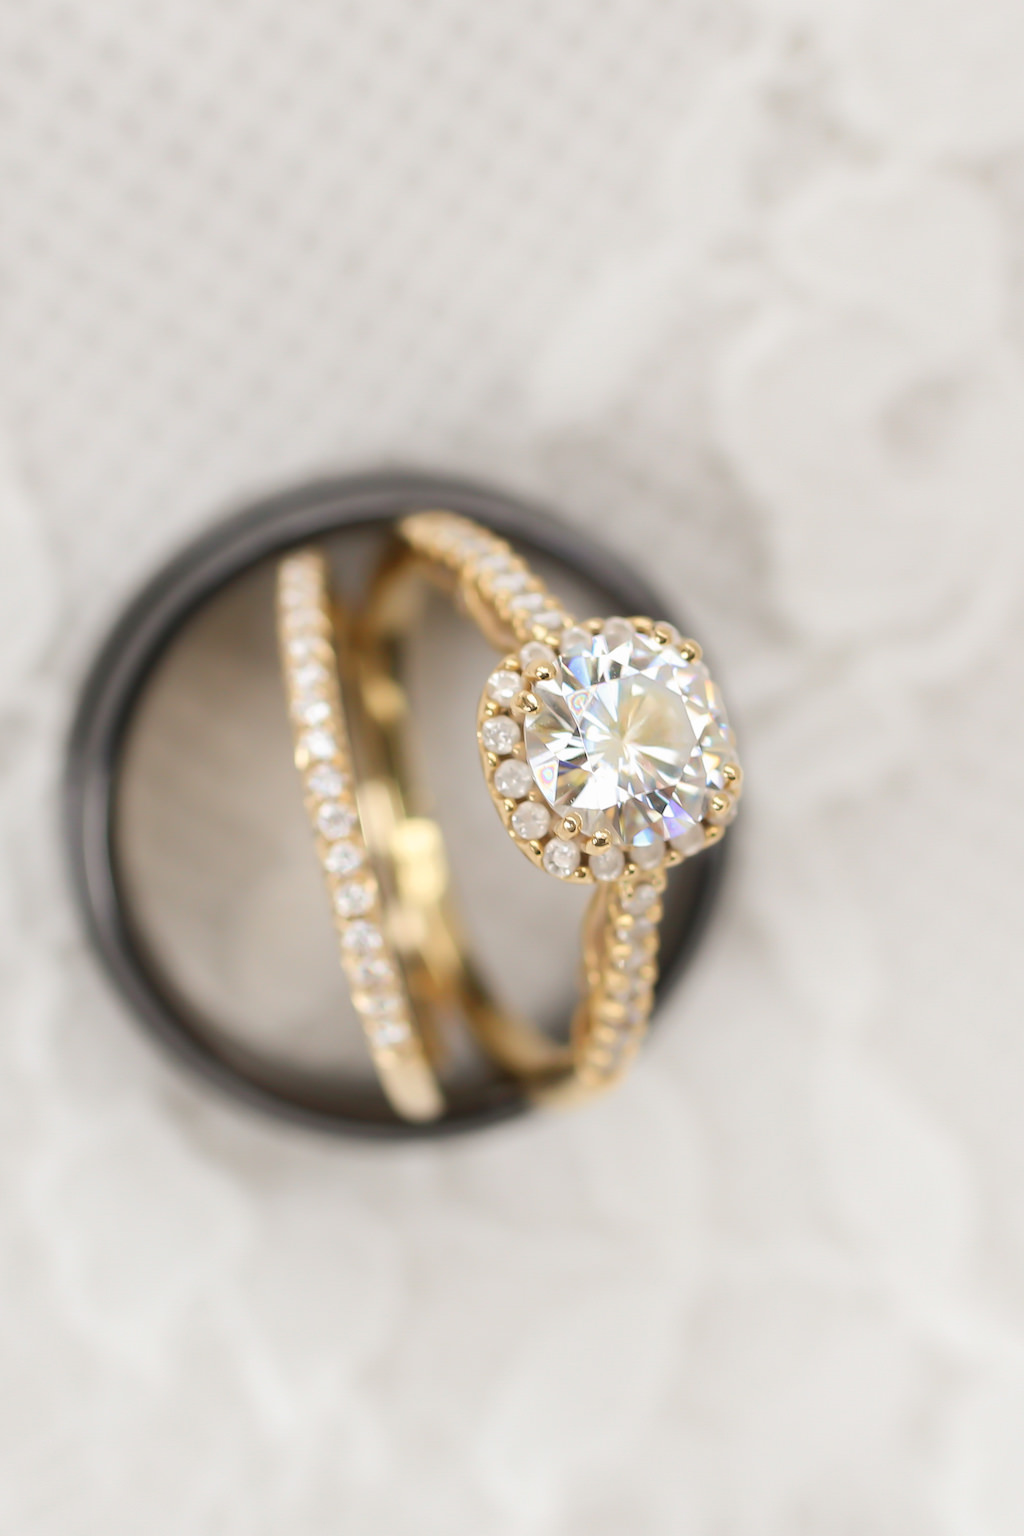 Round Diamond and Halo Yellow Gold Engagement Ring and Diamond and Yellow Gold Wedding Ring | Tampa Bay Wedding Photographer Lifelong Photography Studios